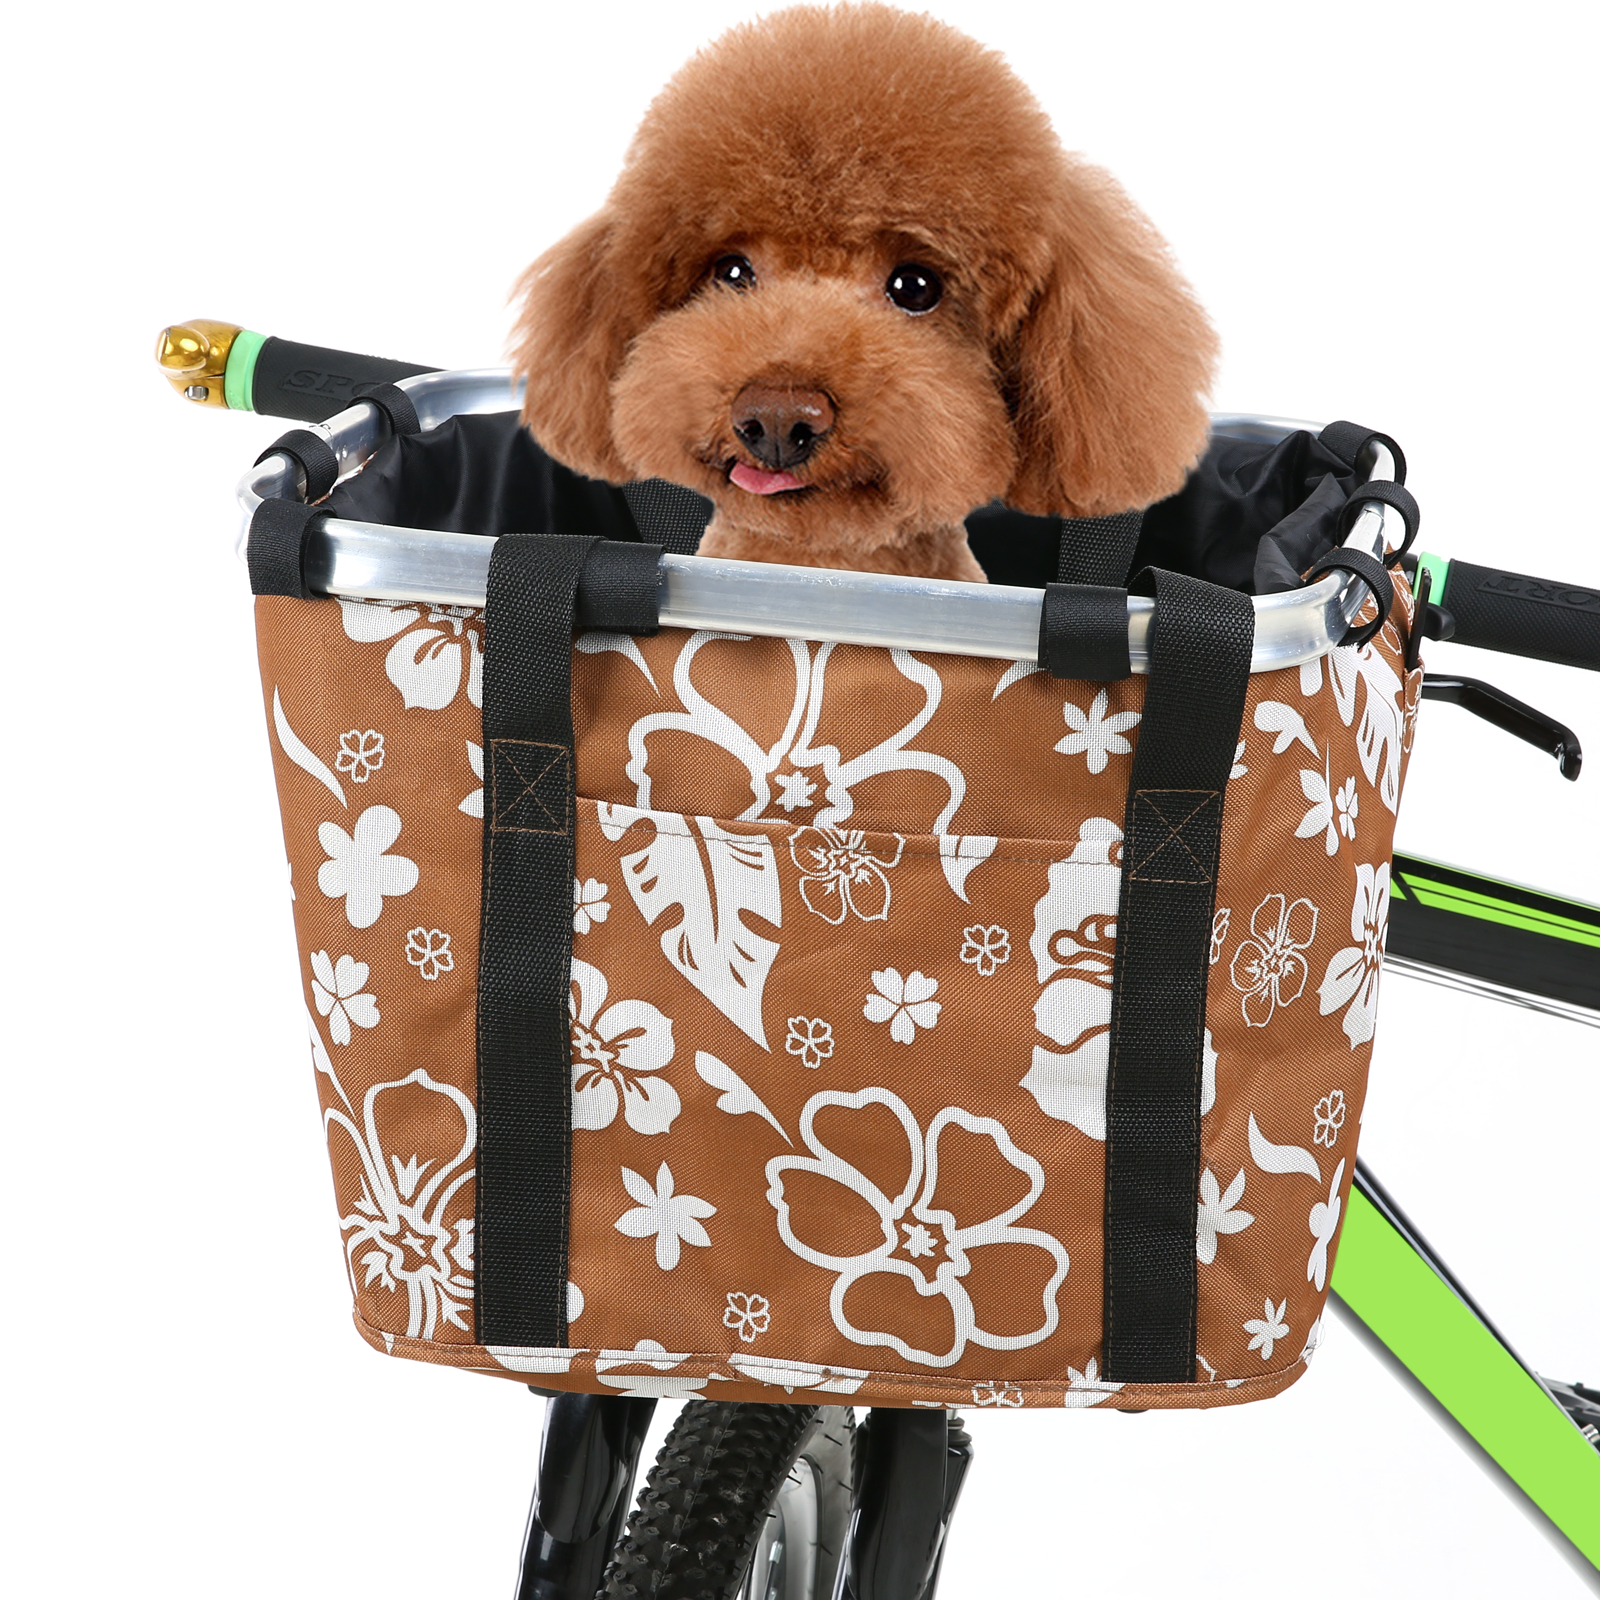 Collapsible Bike Basket Flower Printed Small Pet Cat Dog Carrier Bag